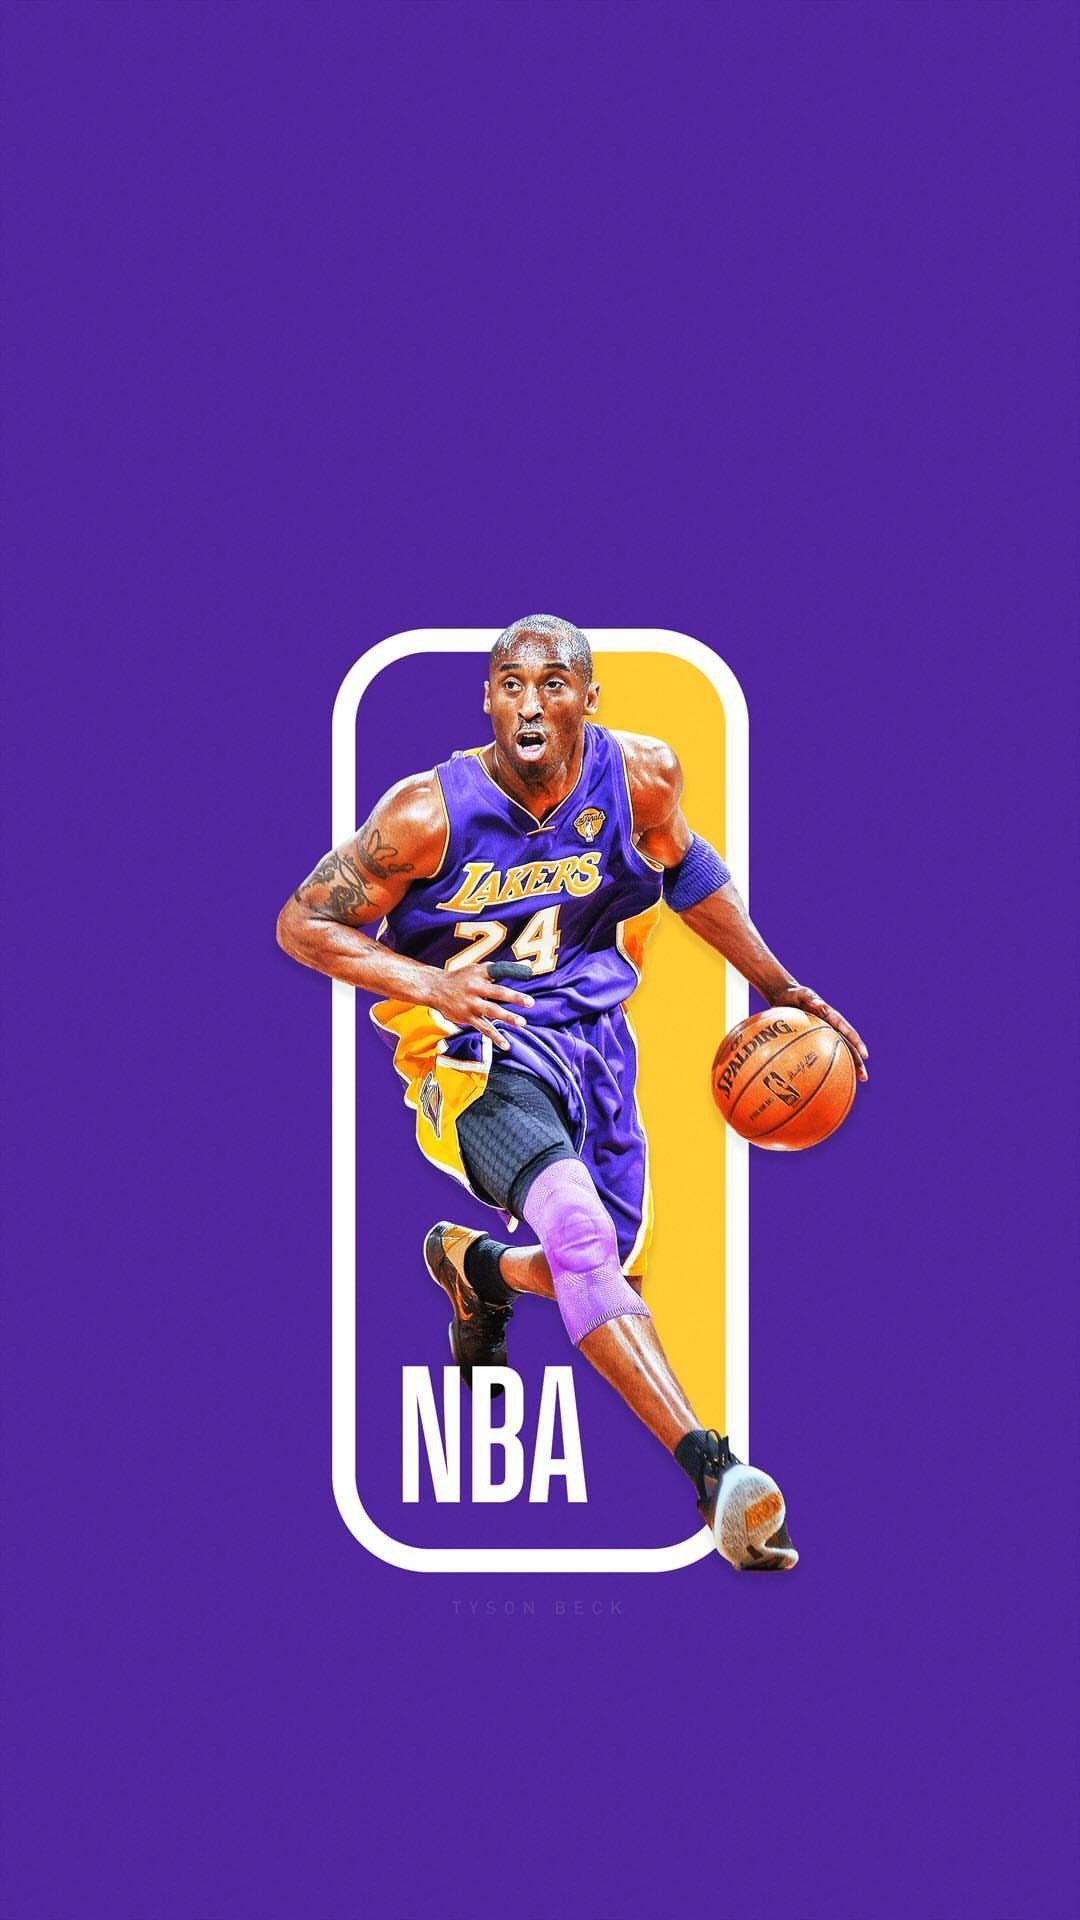 Kobe Bryant Wallpaper. Kobe bryant wallpaper, Kobe bryant, Nba logo